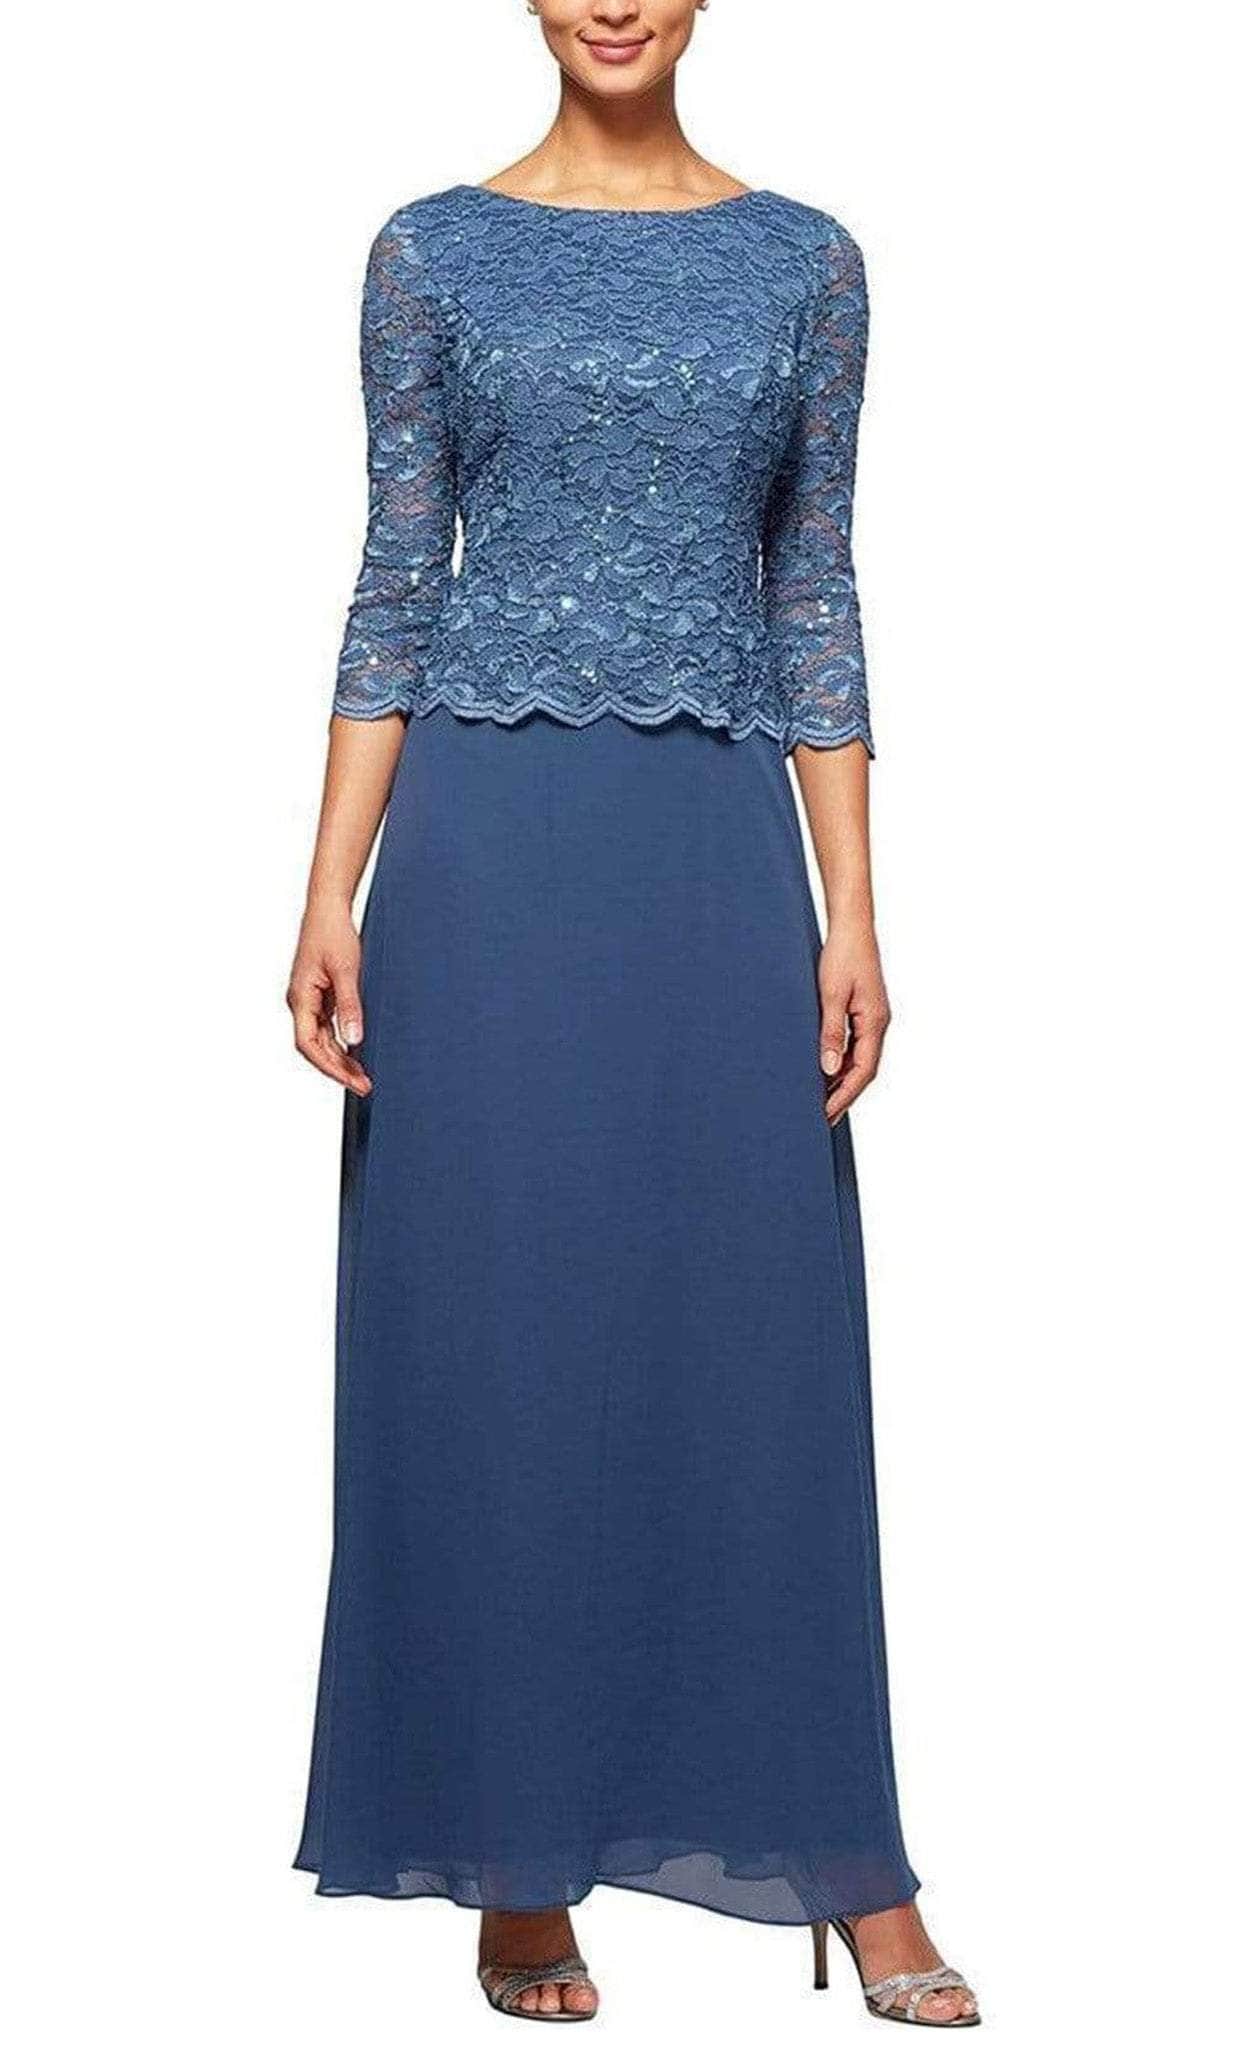 Alex Evenings - 112655 Scallop Lace Mock Dress with Chiffon Skirt
